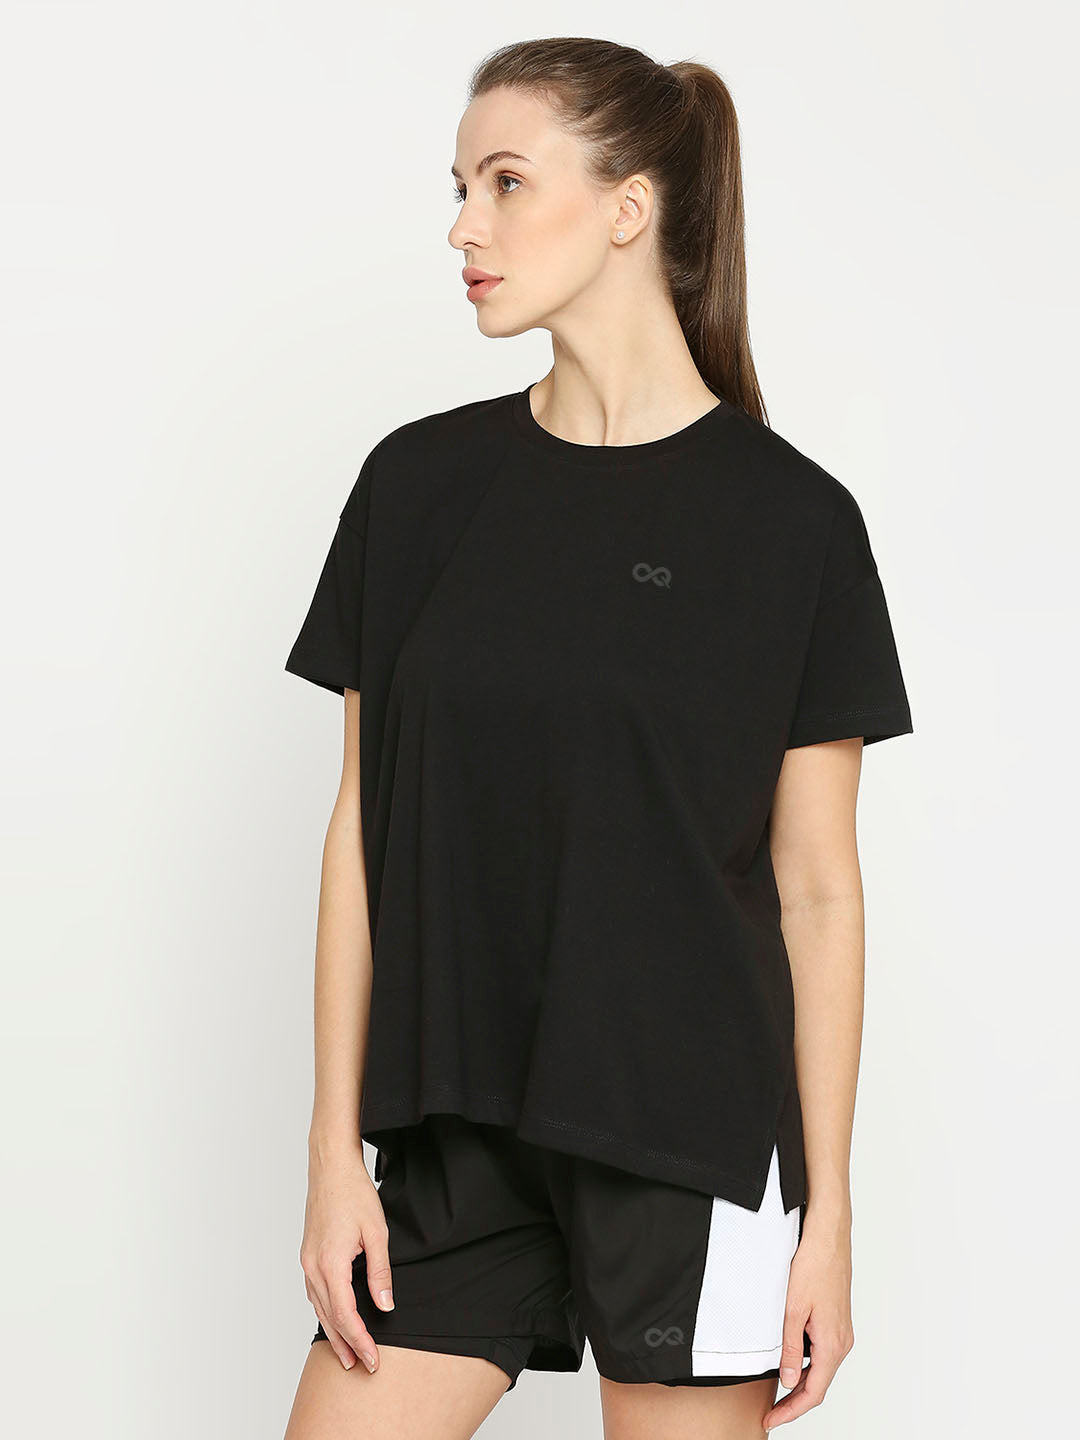 Women's Black Oversized Sports T-Shirt - Stay Stylish and Comfortable